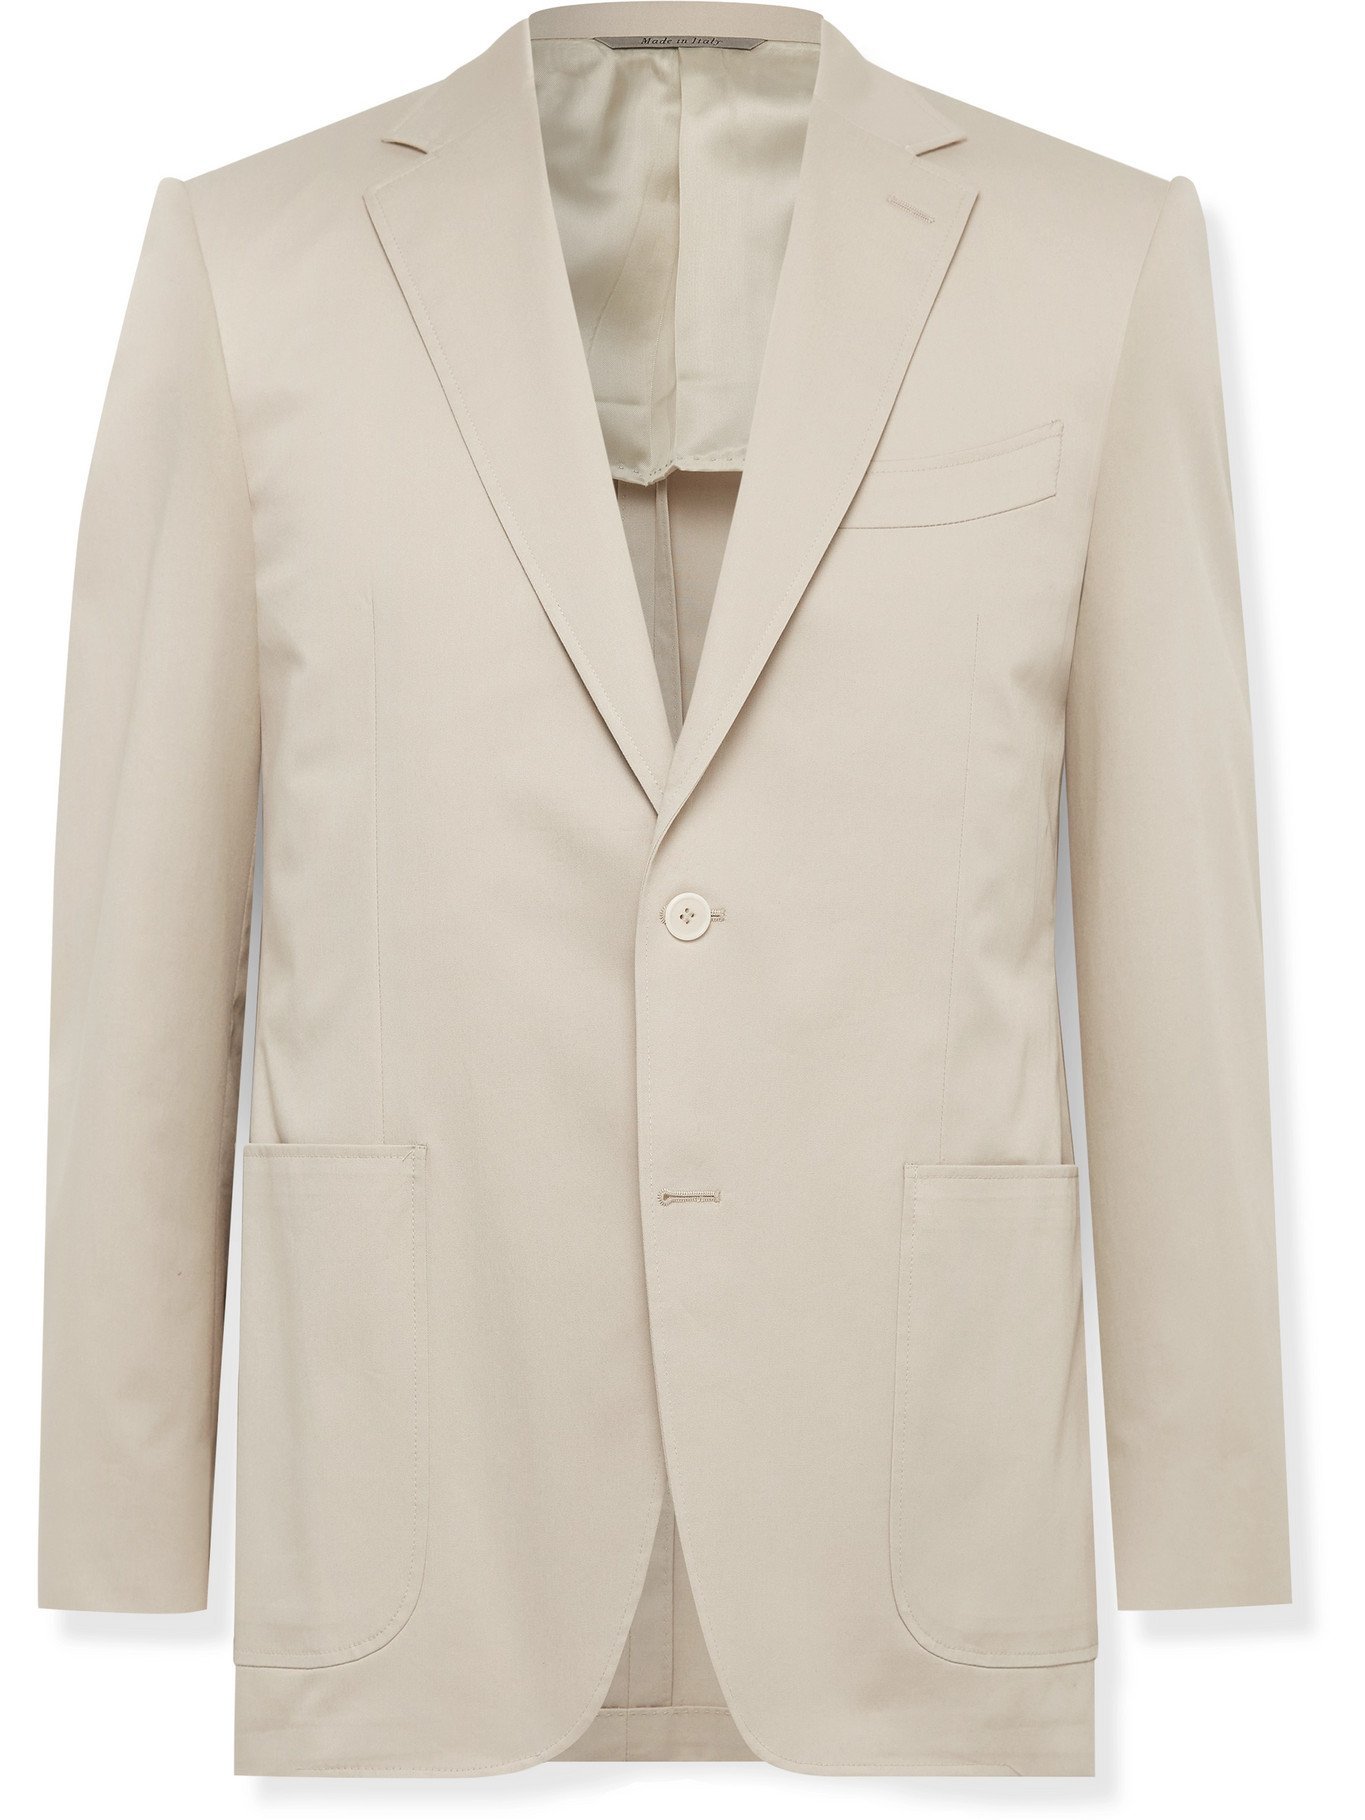 CANALI - Slim-Fit Cotton-Blend Twill Suit Jacket - Neutrals Canali